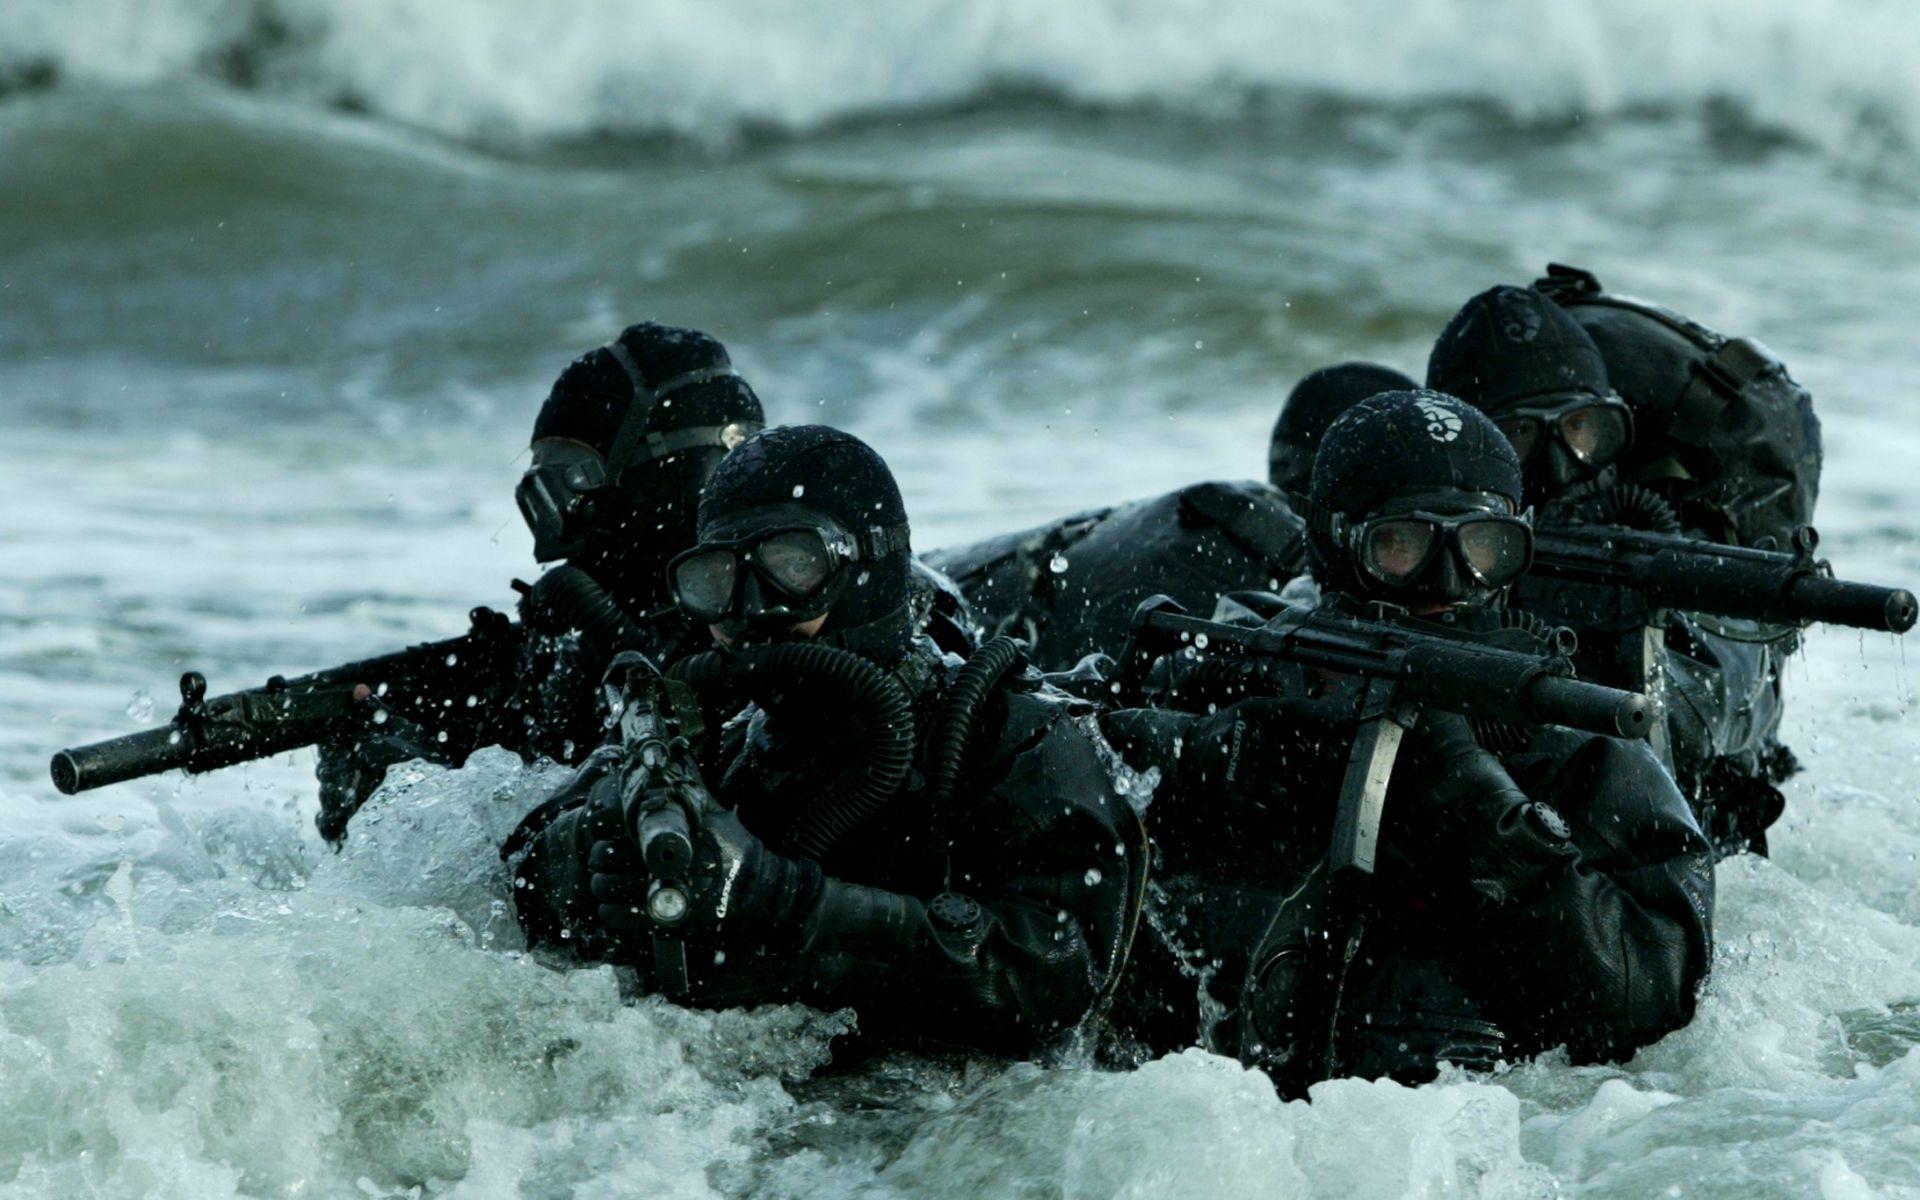 navy seals trident wallpaper